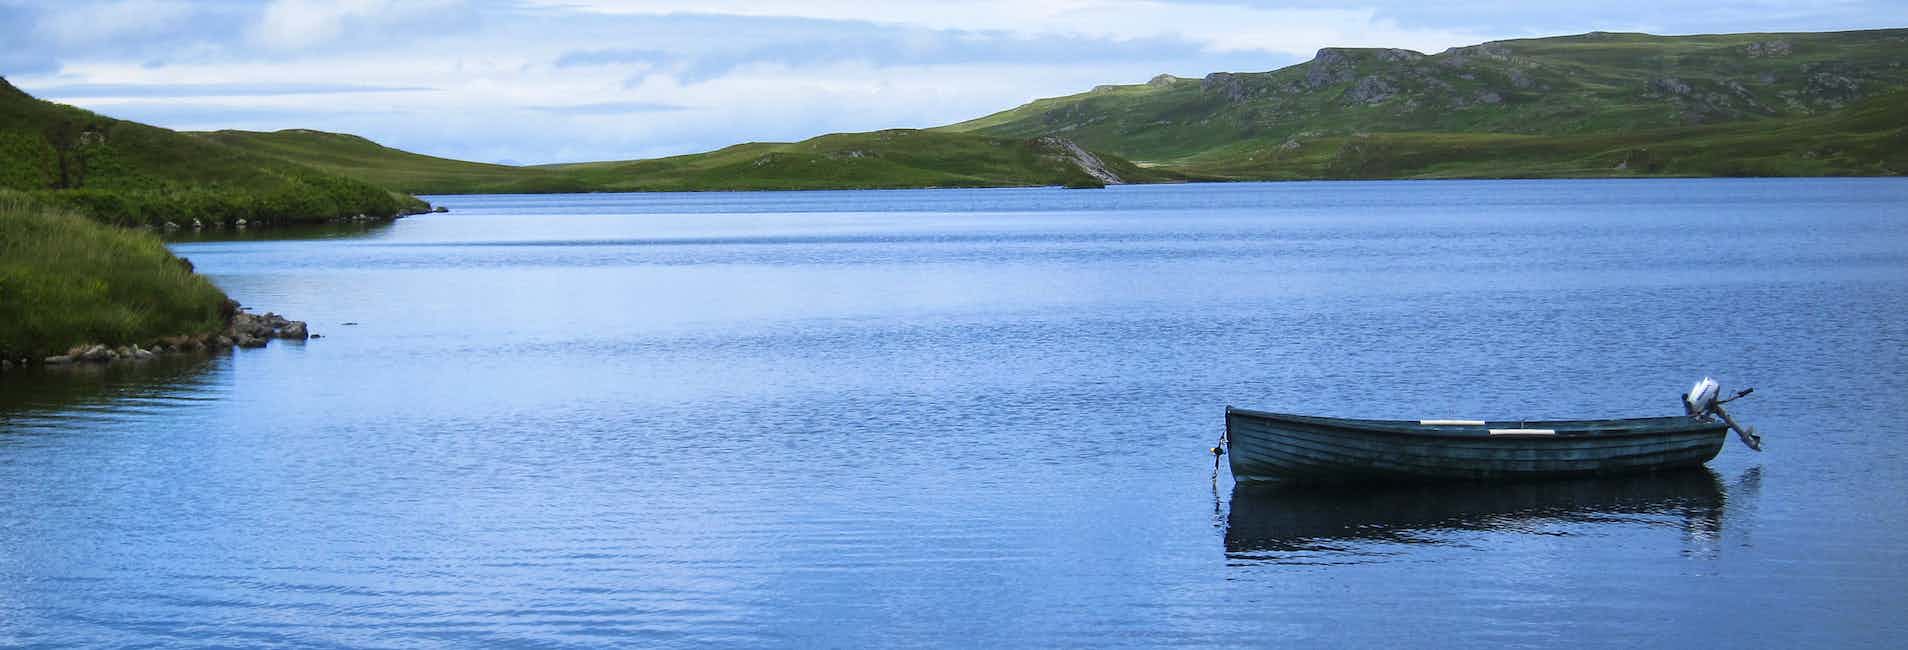 Loch Righ Mor